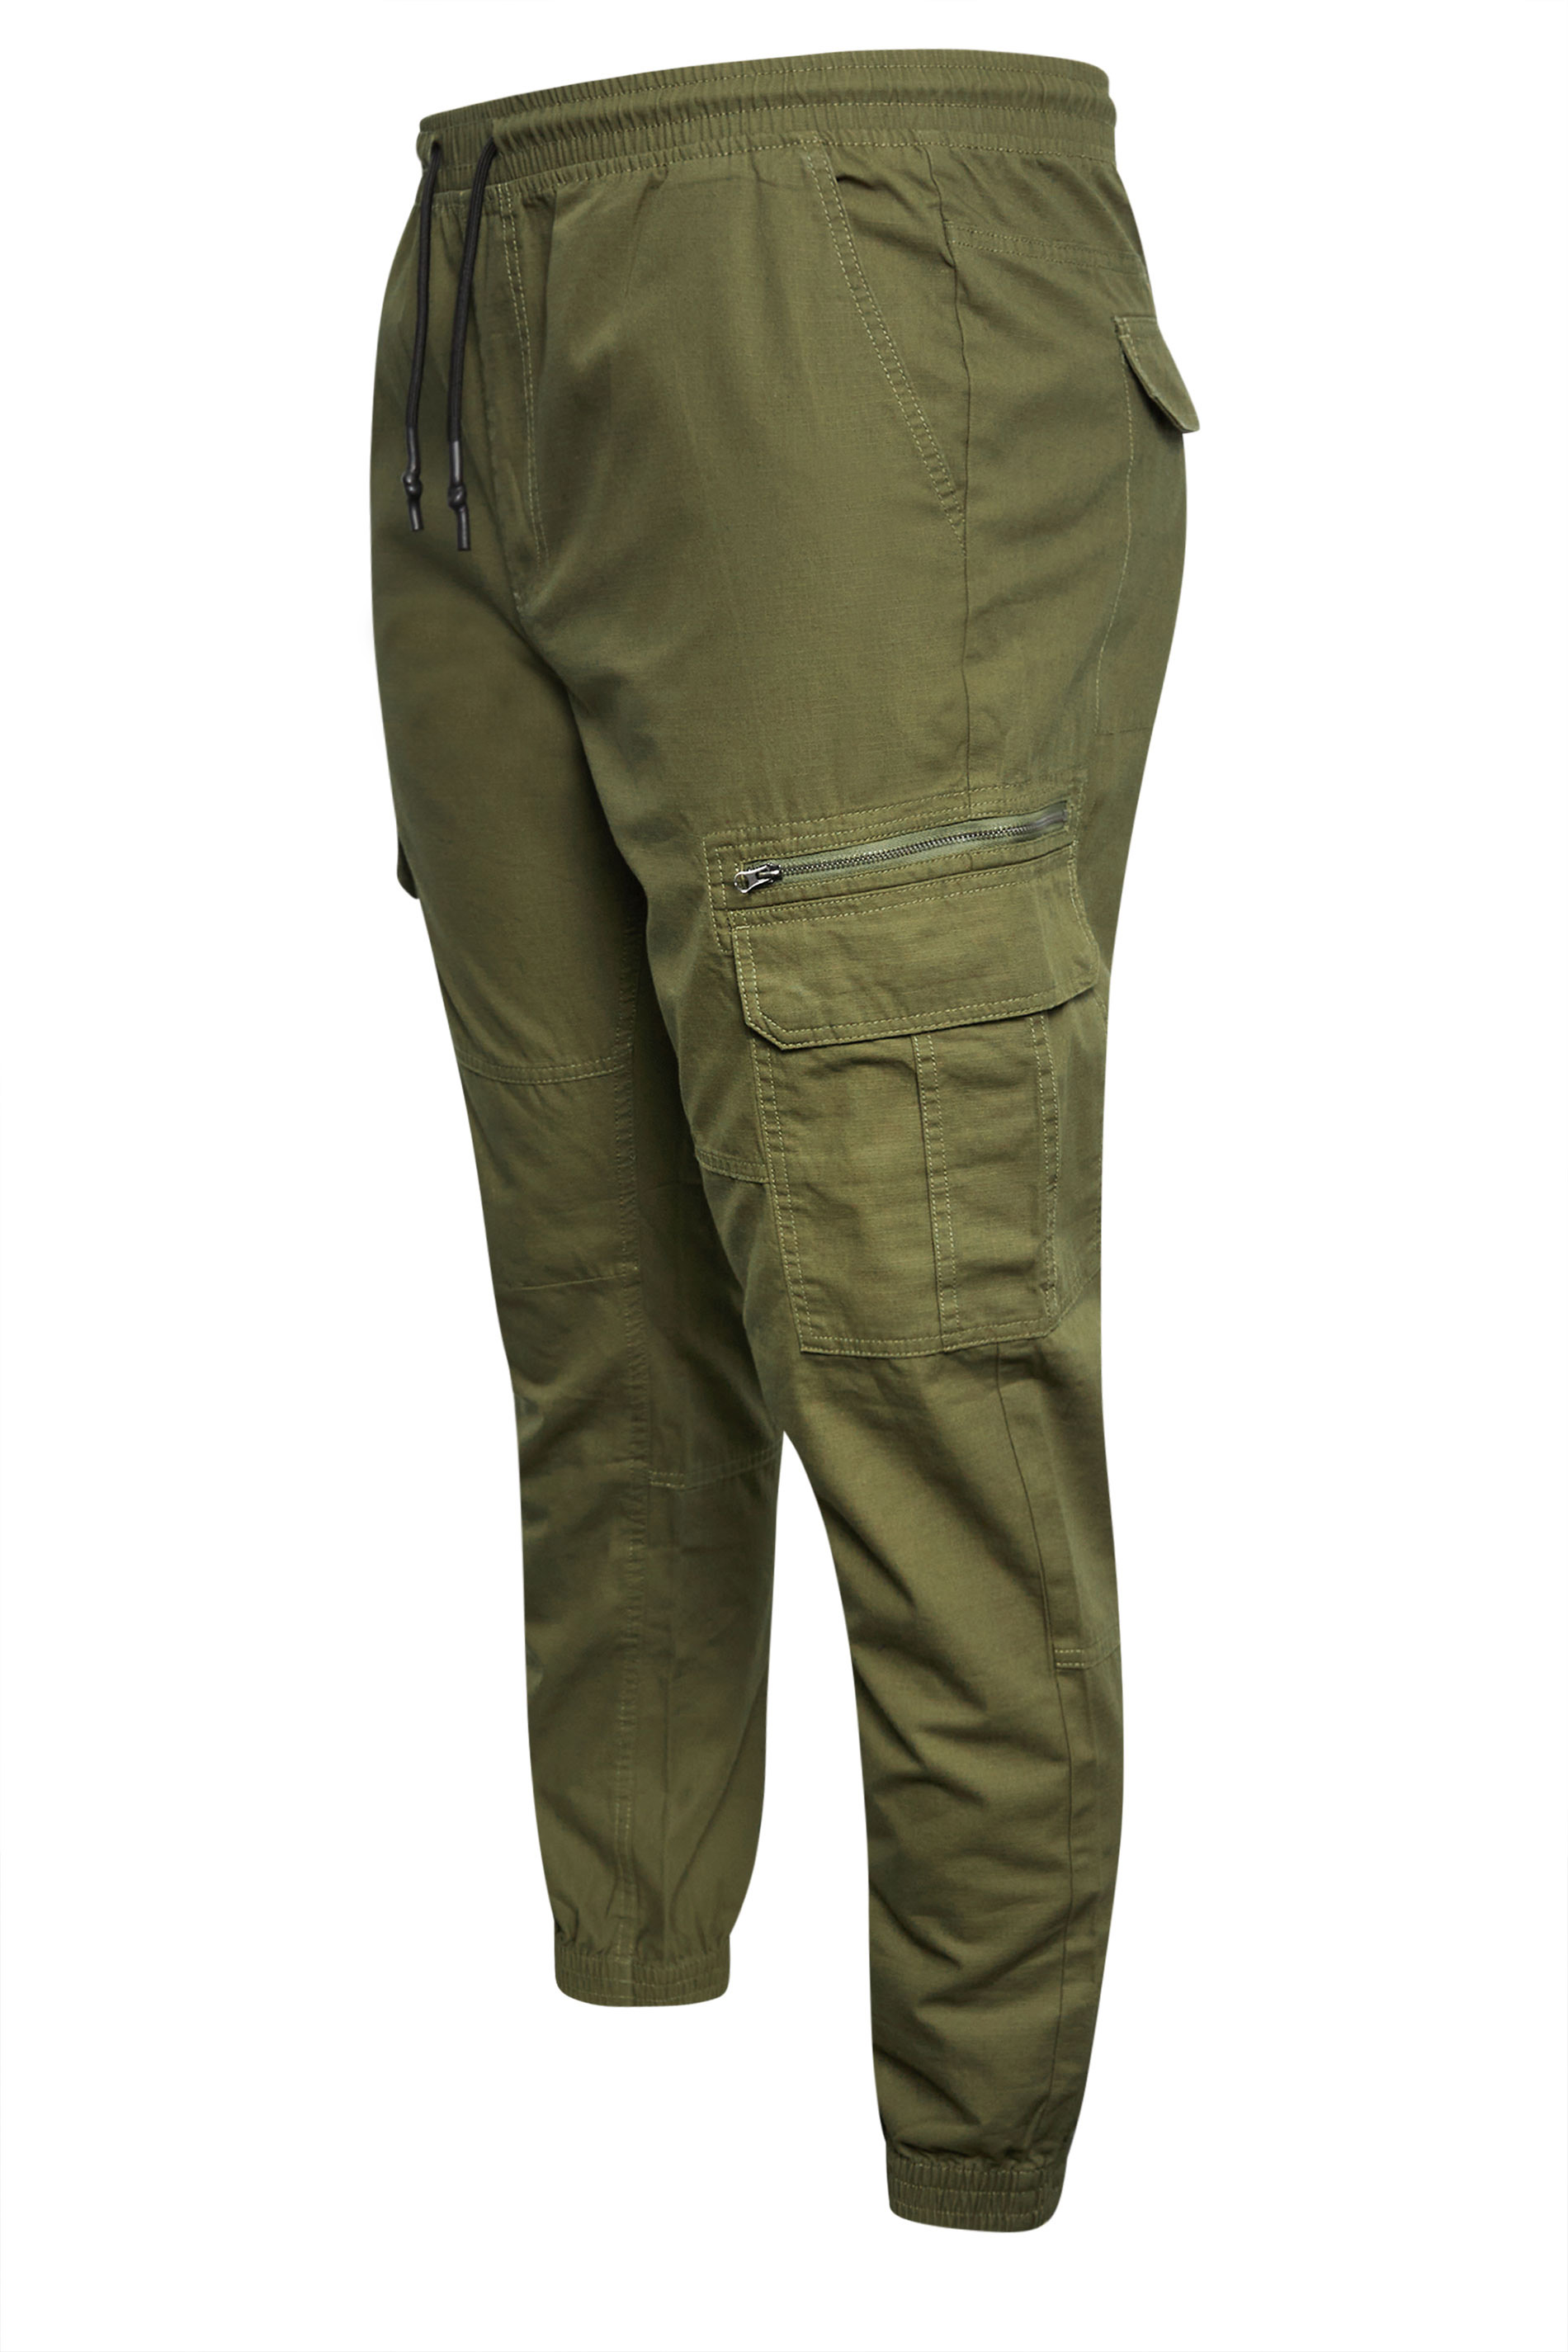 BadRhino Big & Tall Khaki Green Ripstop Cargo Trousers